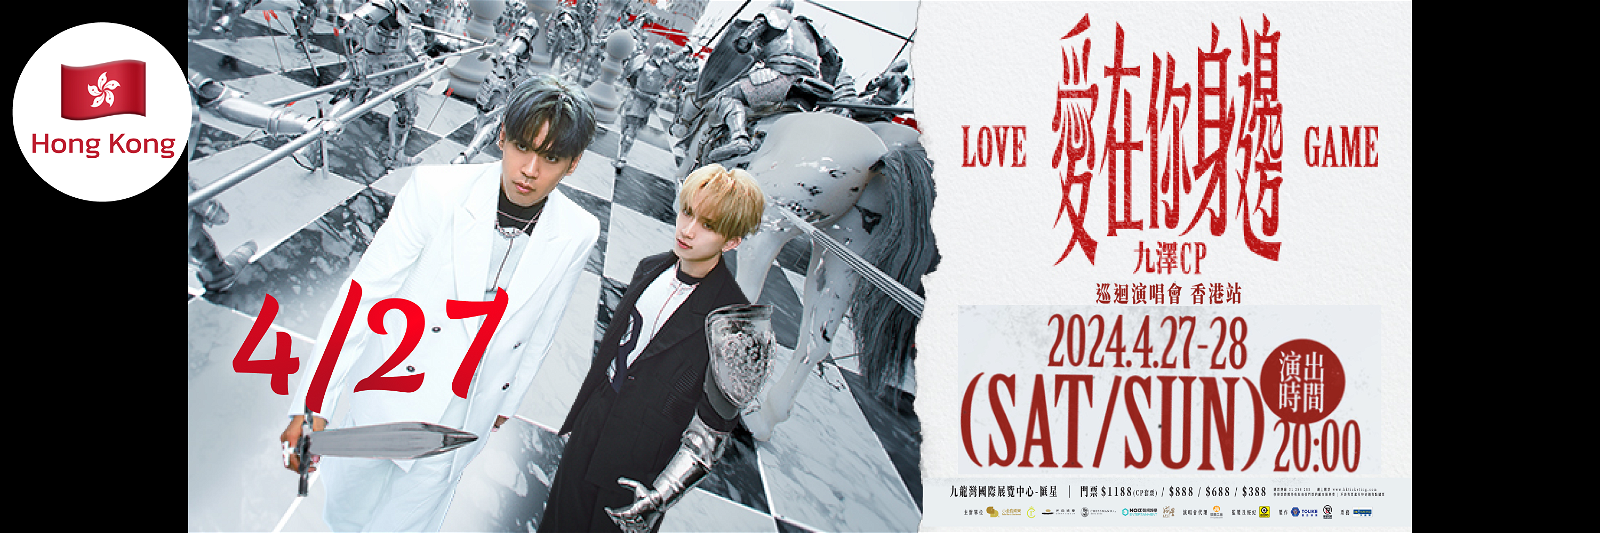 love-game-hk-20240427